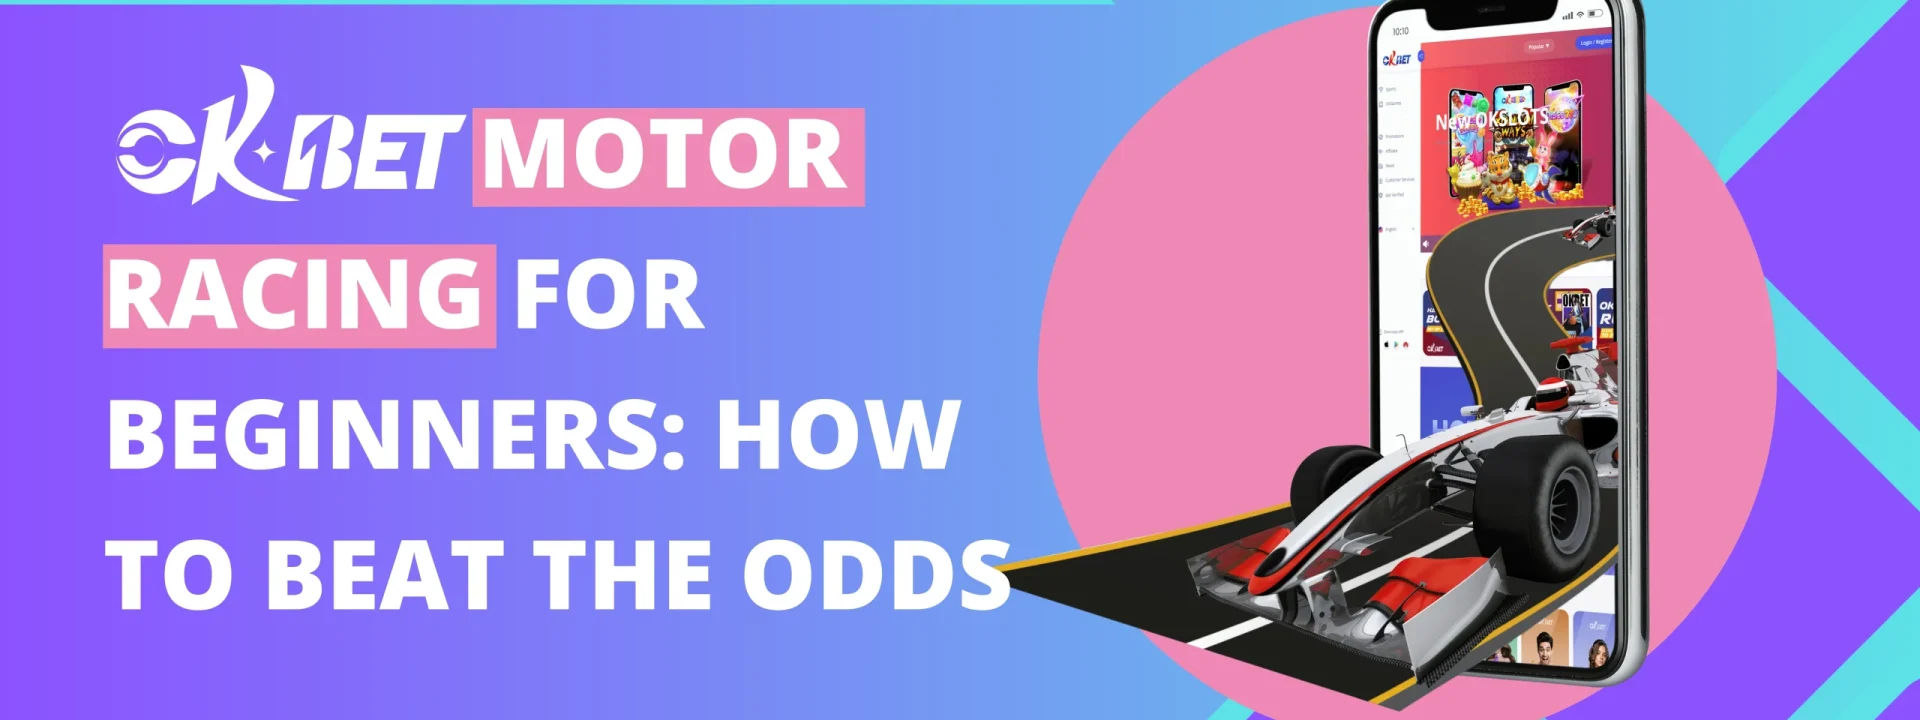 OKBet Motor Racing For Beginners: How To Beat The Odds